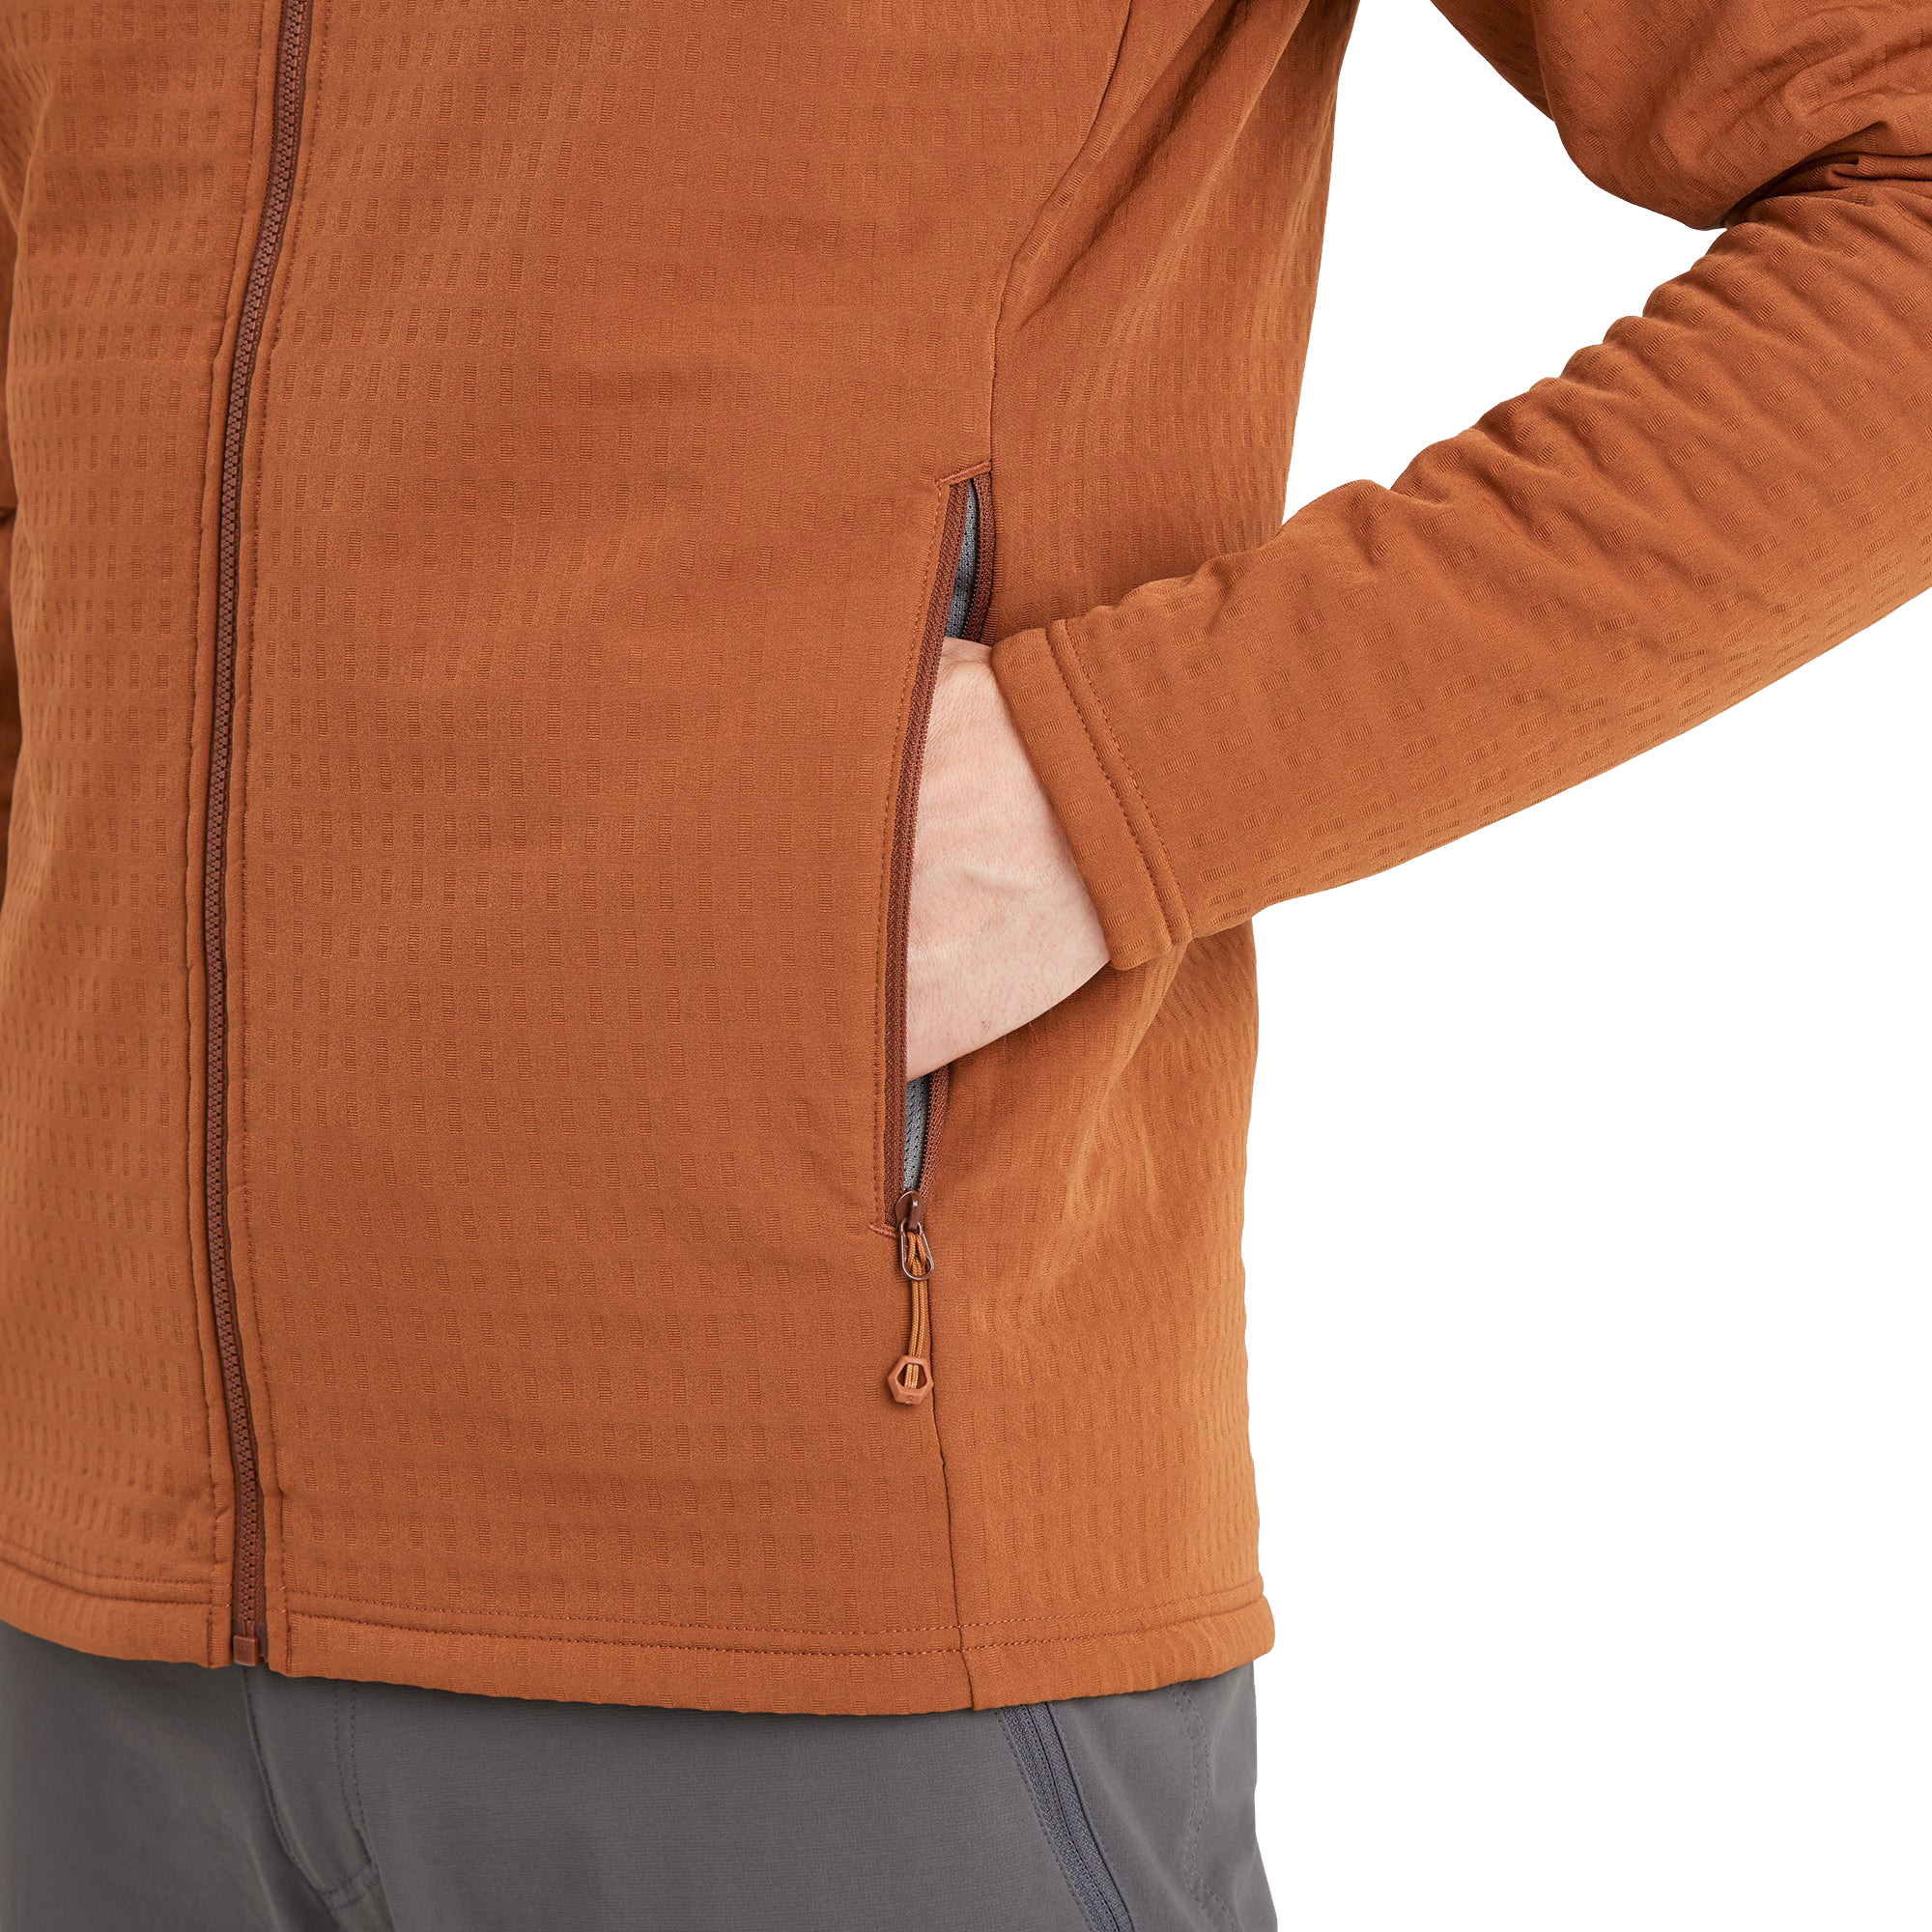 Montane Protium XT Technical Full-Zip Hooded Jacket